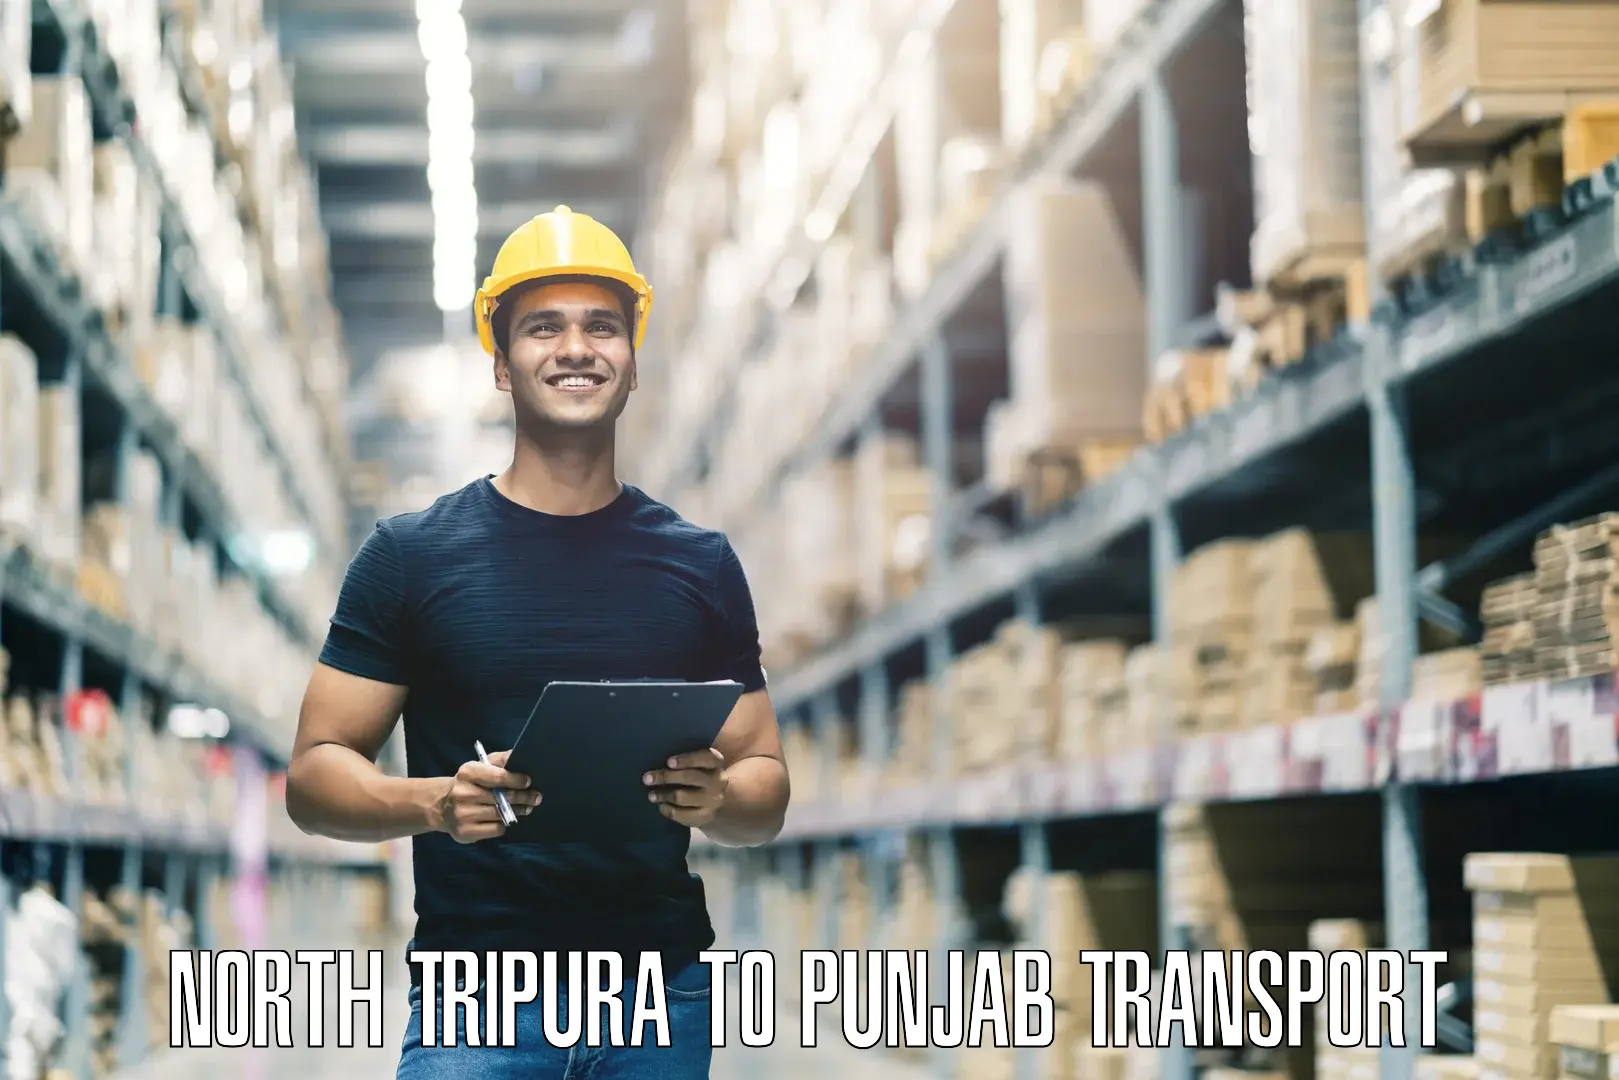 Commercial transport service North Tripura to Phagwara